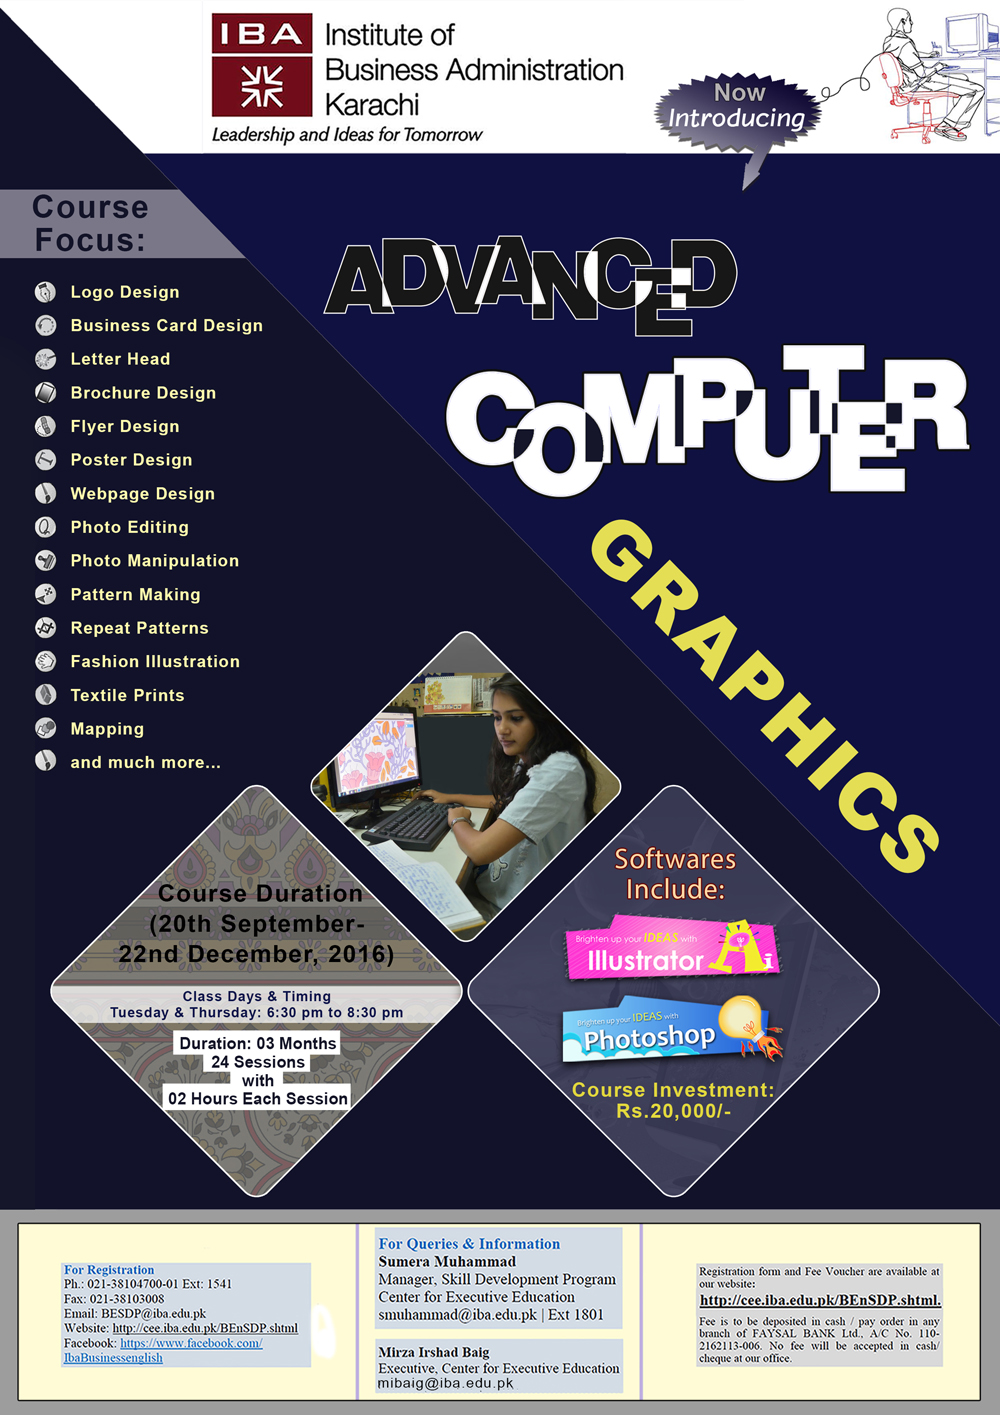 Advanced Computer Graphics